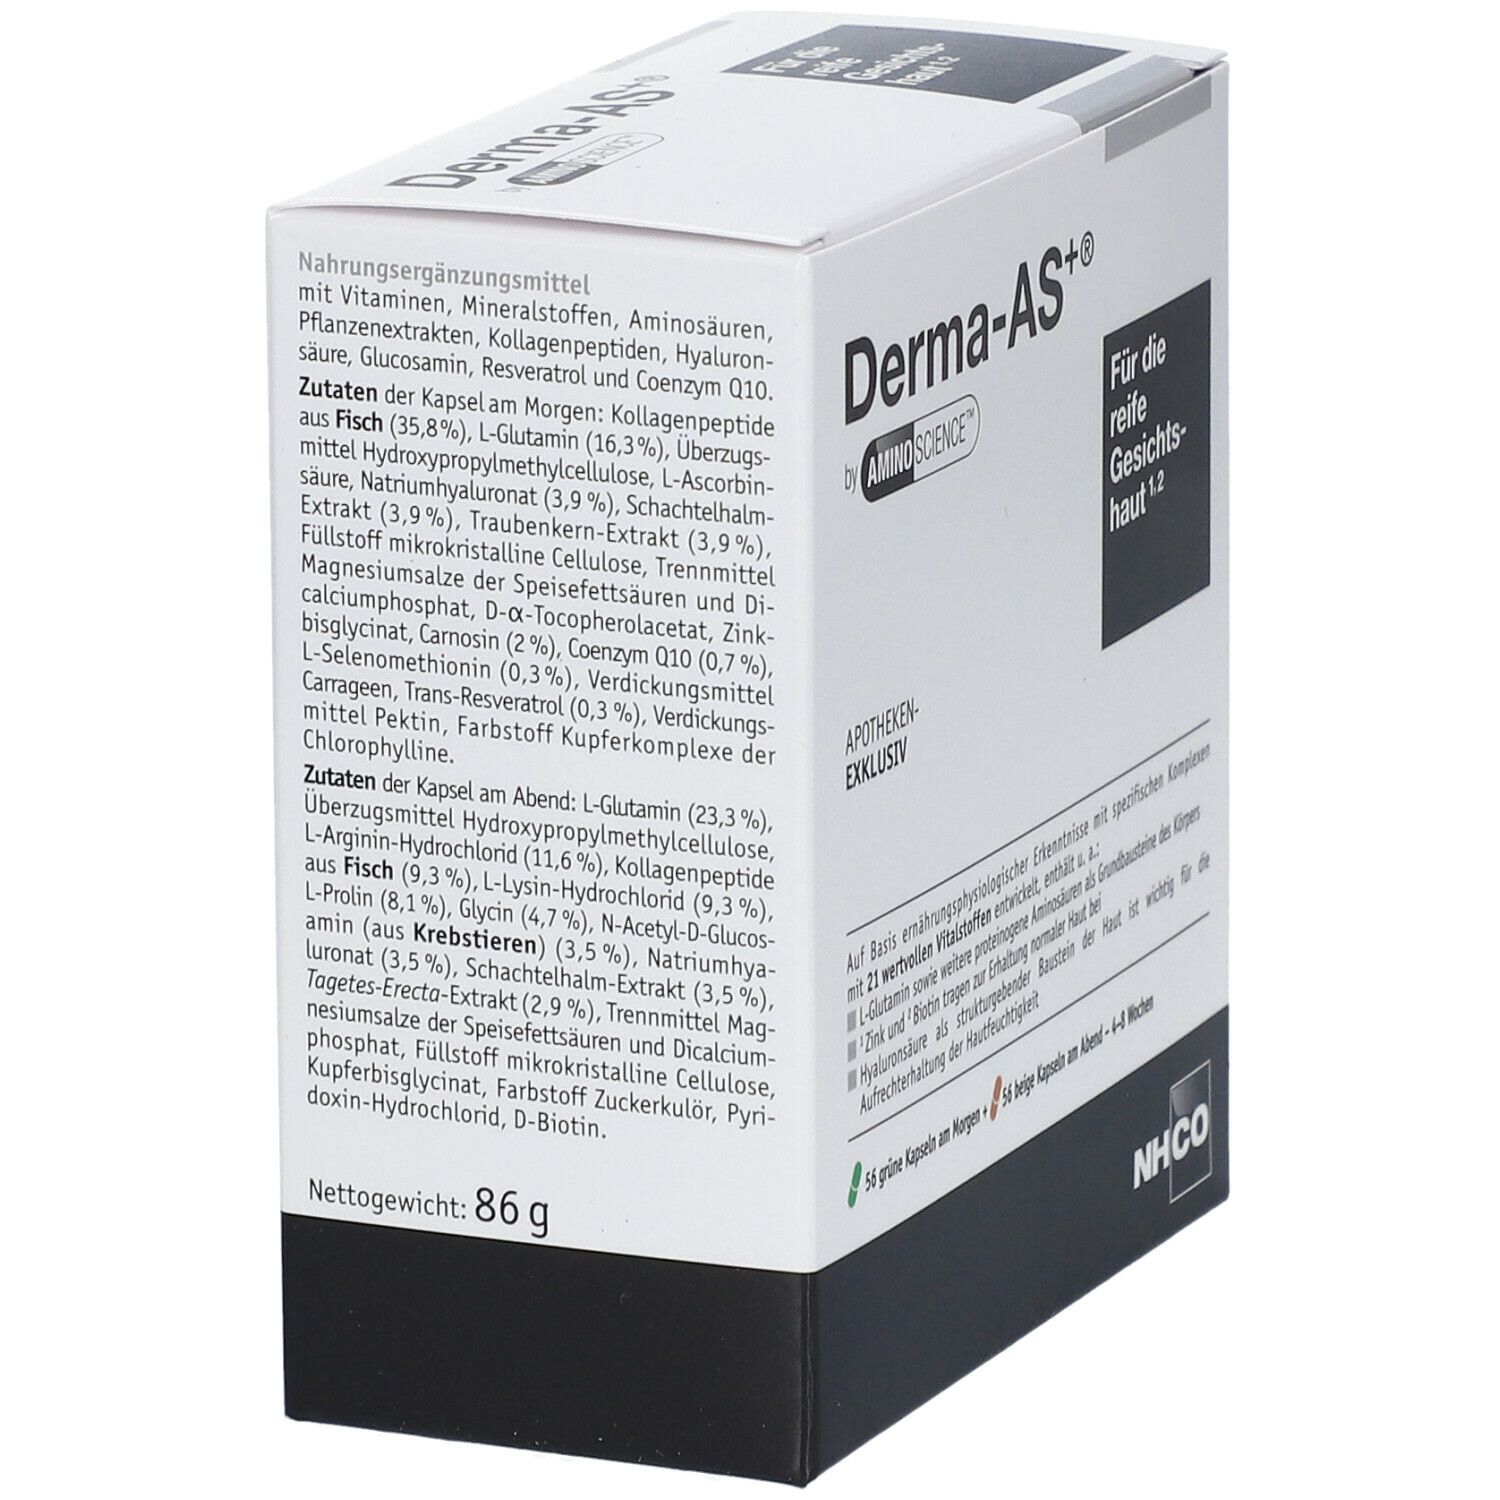 Derma-AS+ by Aminoscience® NHCO